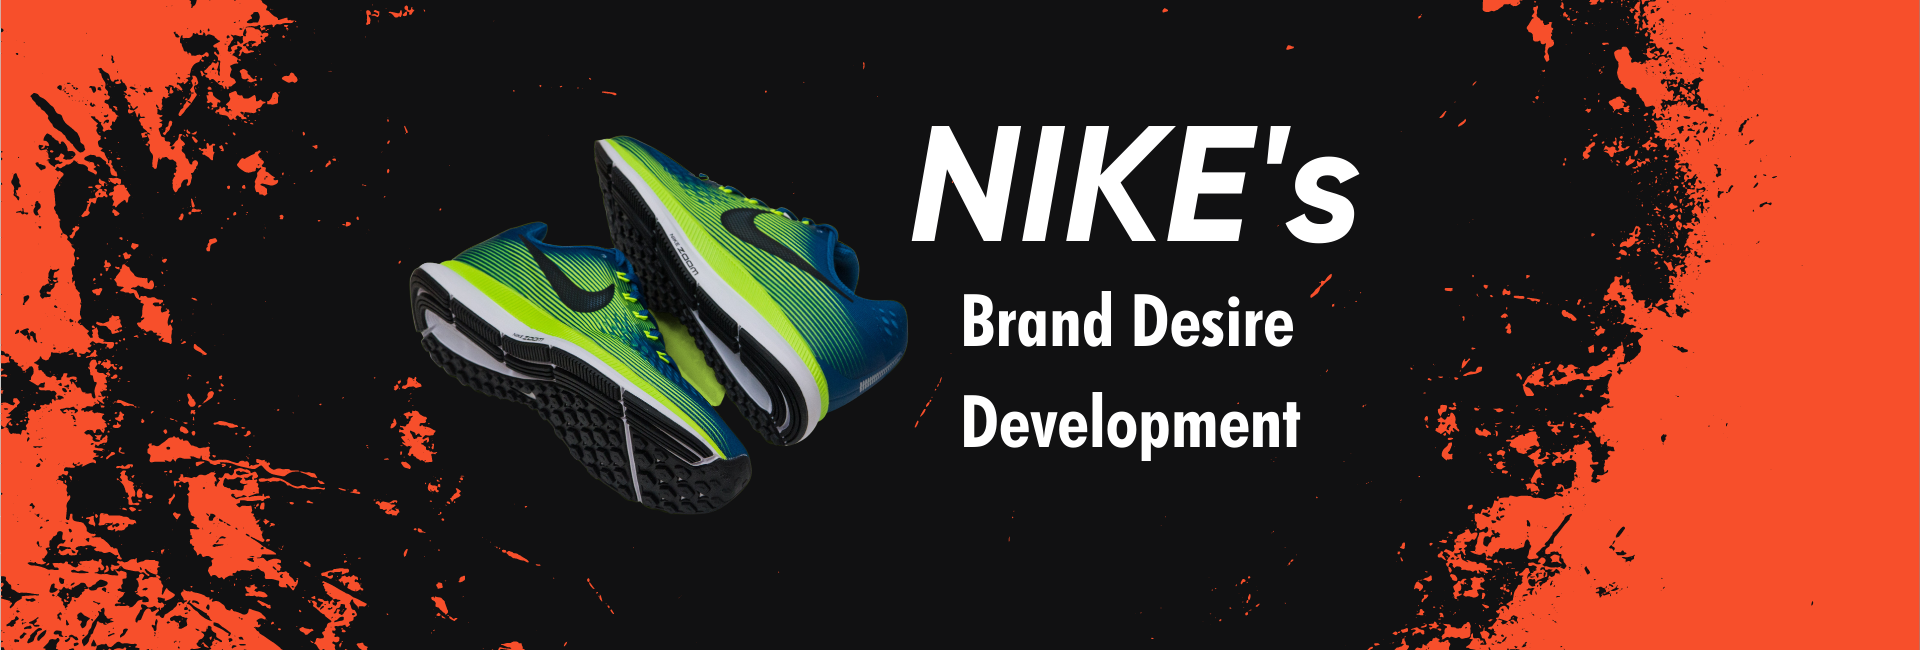 Brand Desire Development : A Case Study on Nike